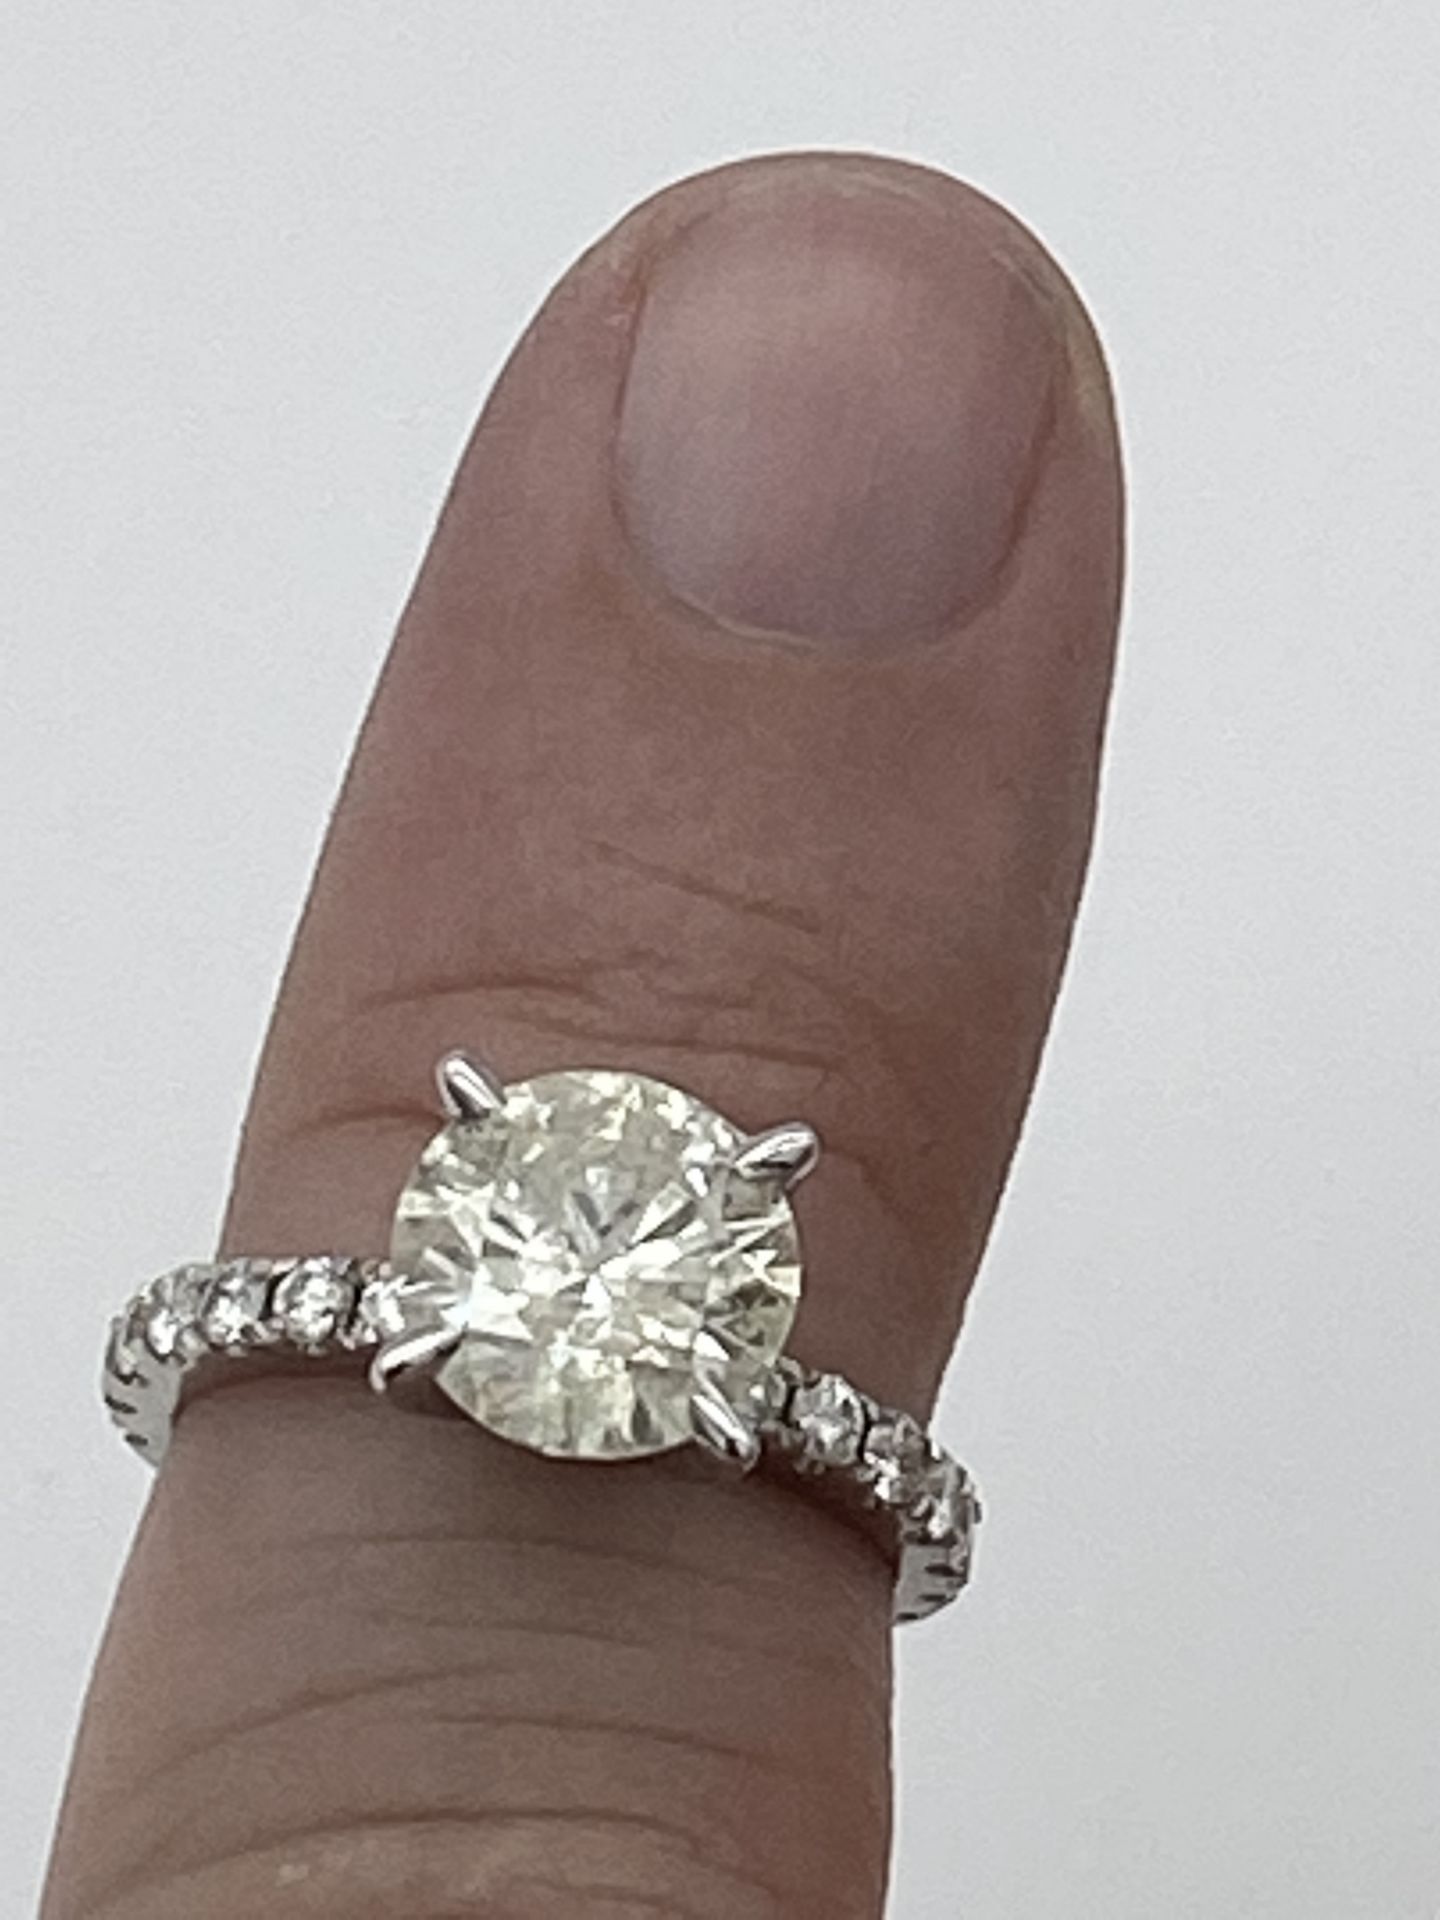 3.13CT DIAMOND RING SET IN 14ct WHITE GOLD - Image 3 of 5